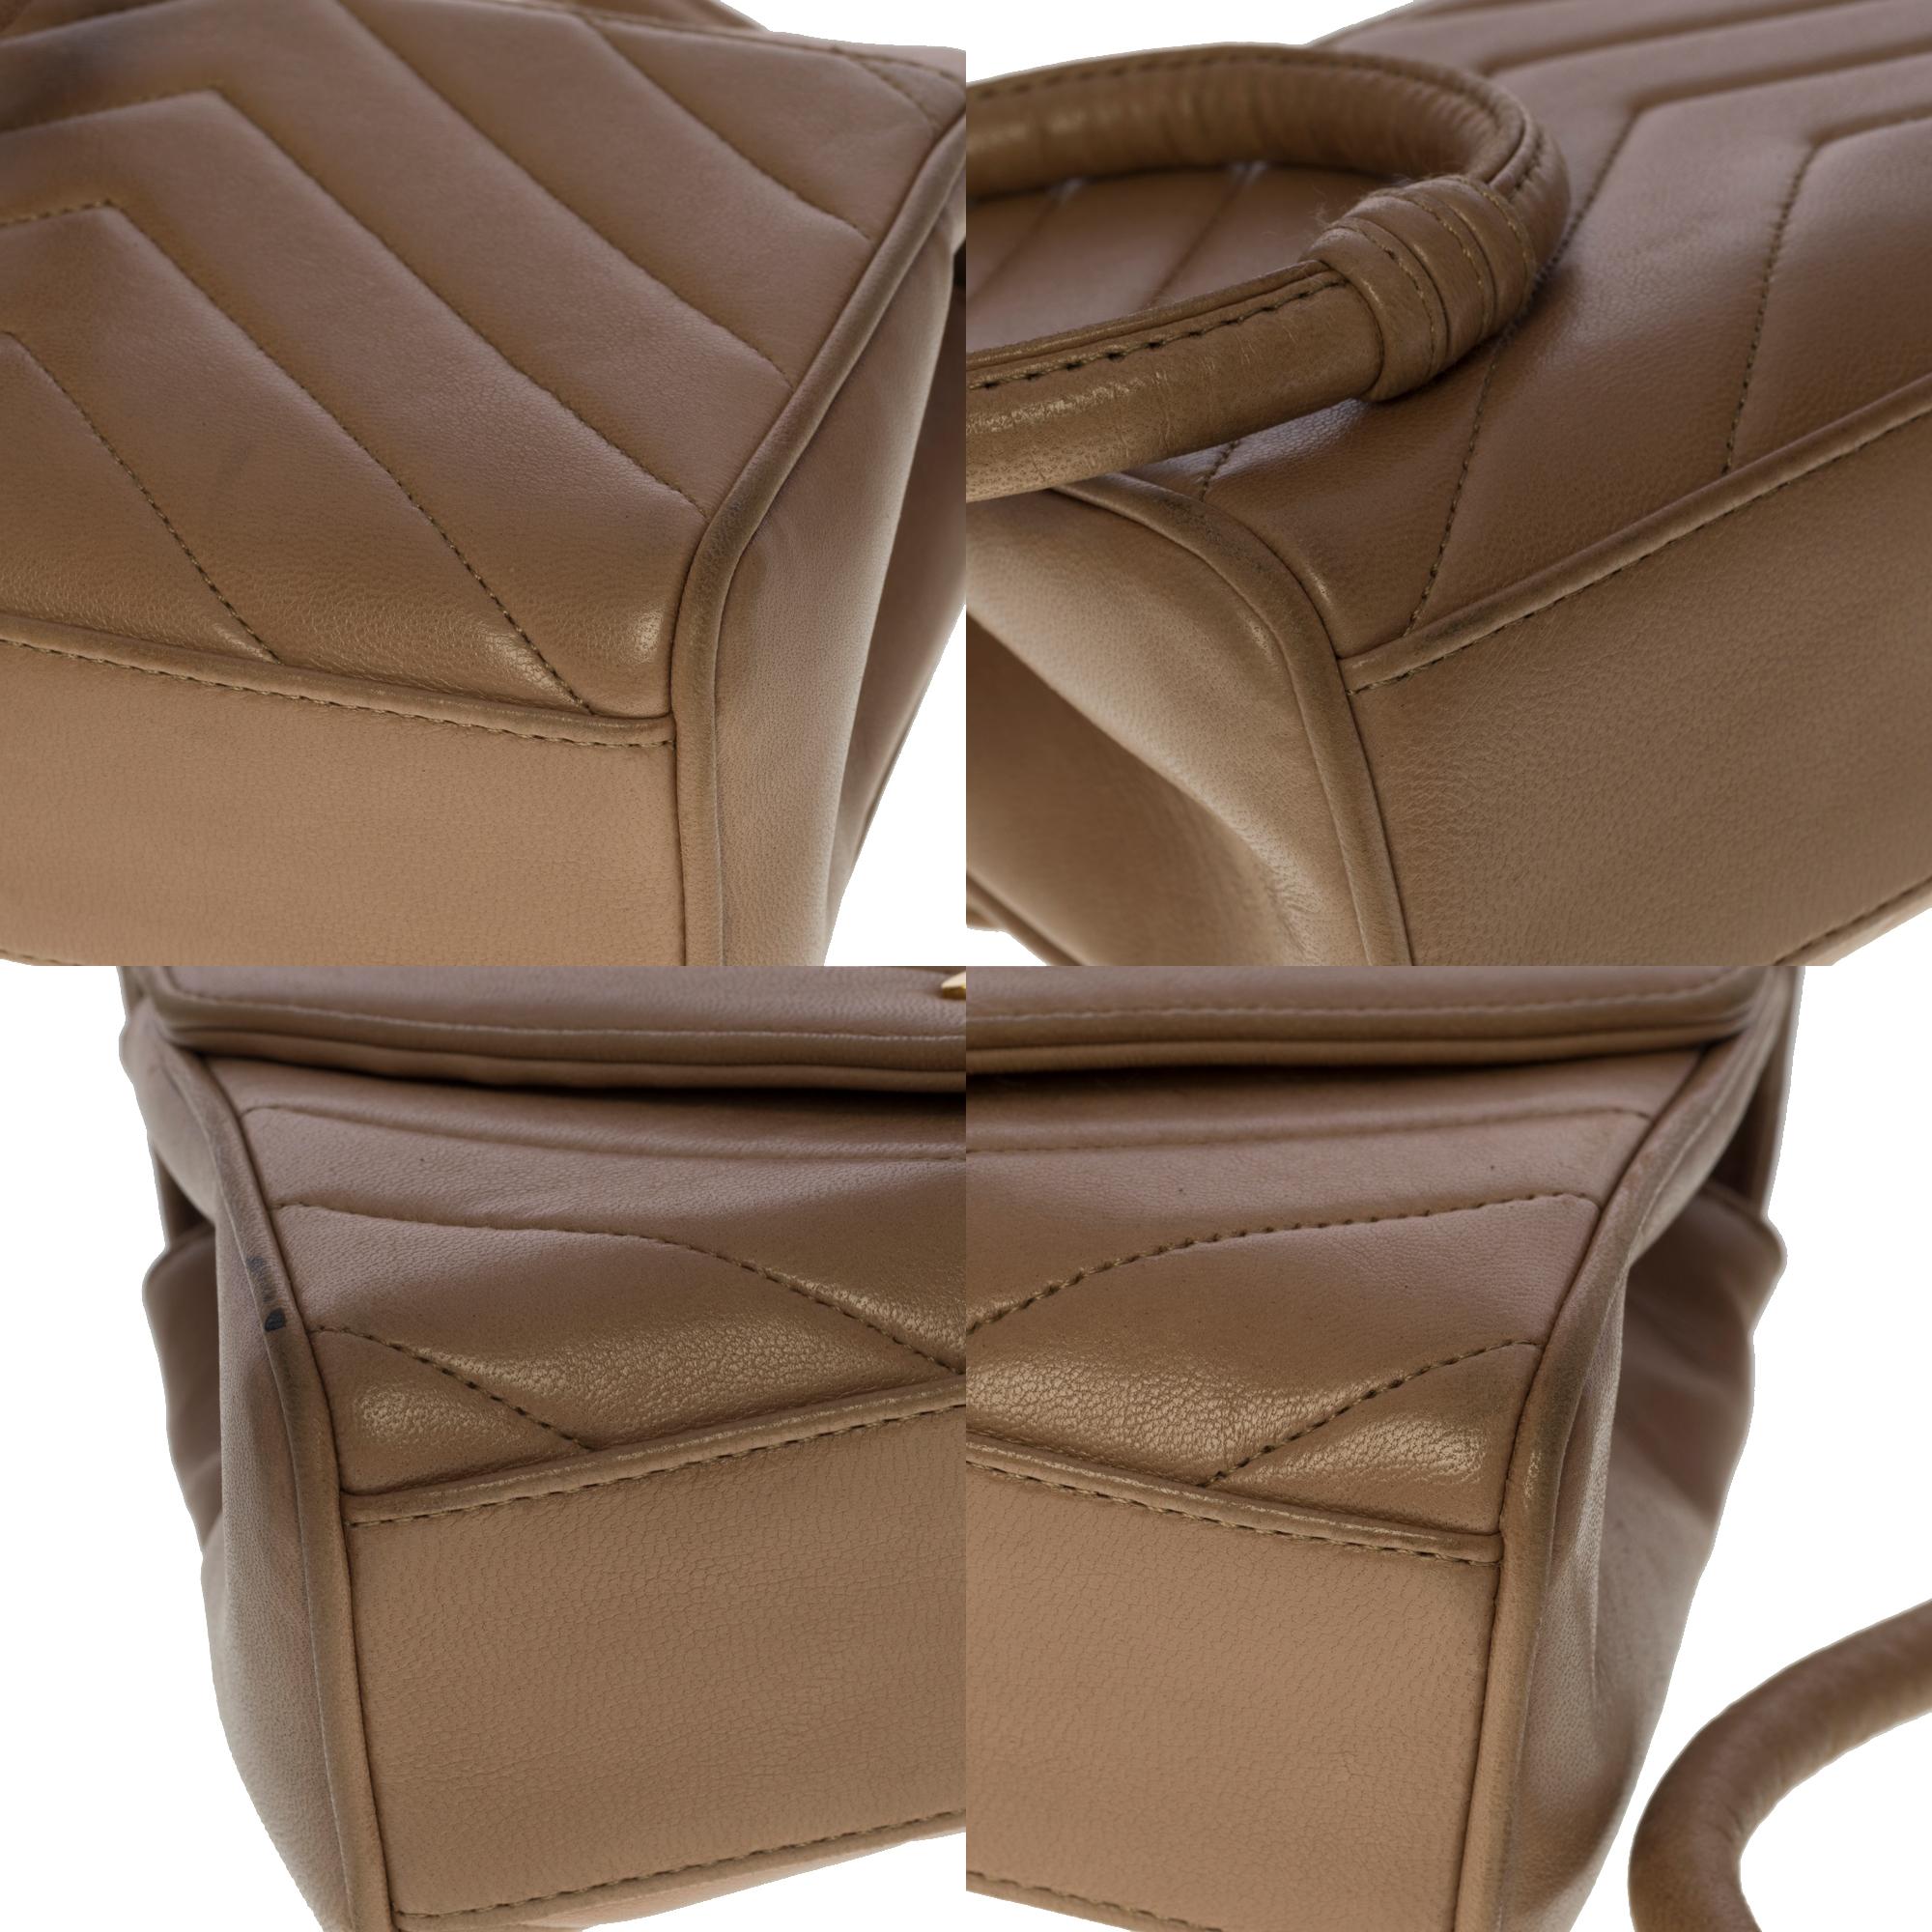 Rare Chanel Mini Flap bag with herringbone pattern in taupe lambskin leather, GHW 2